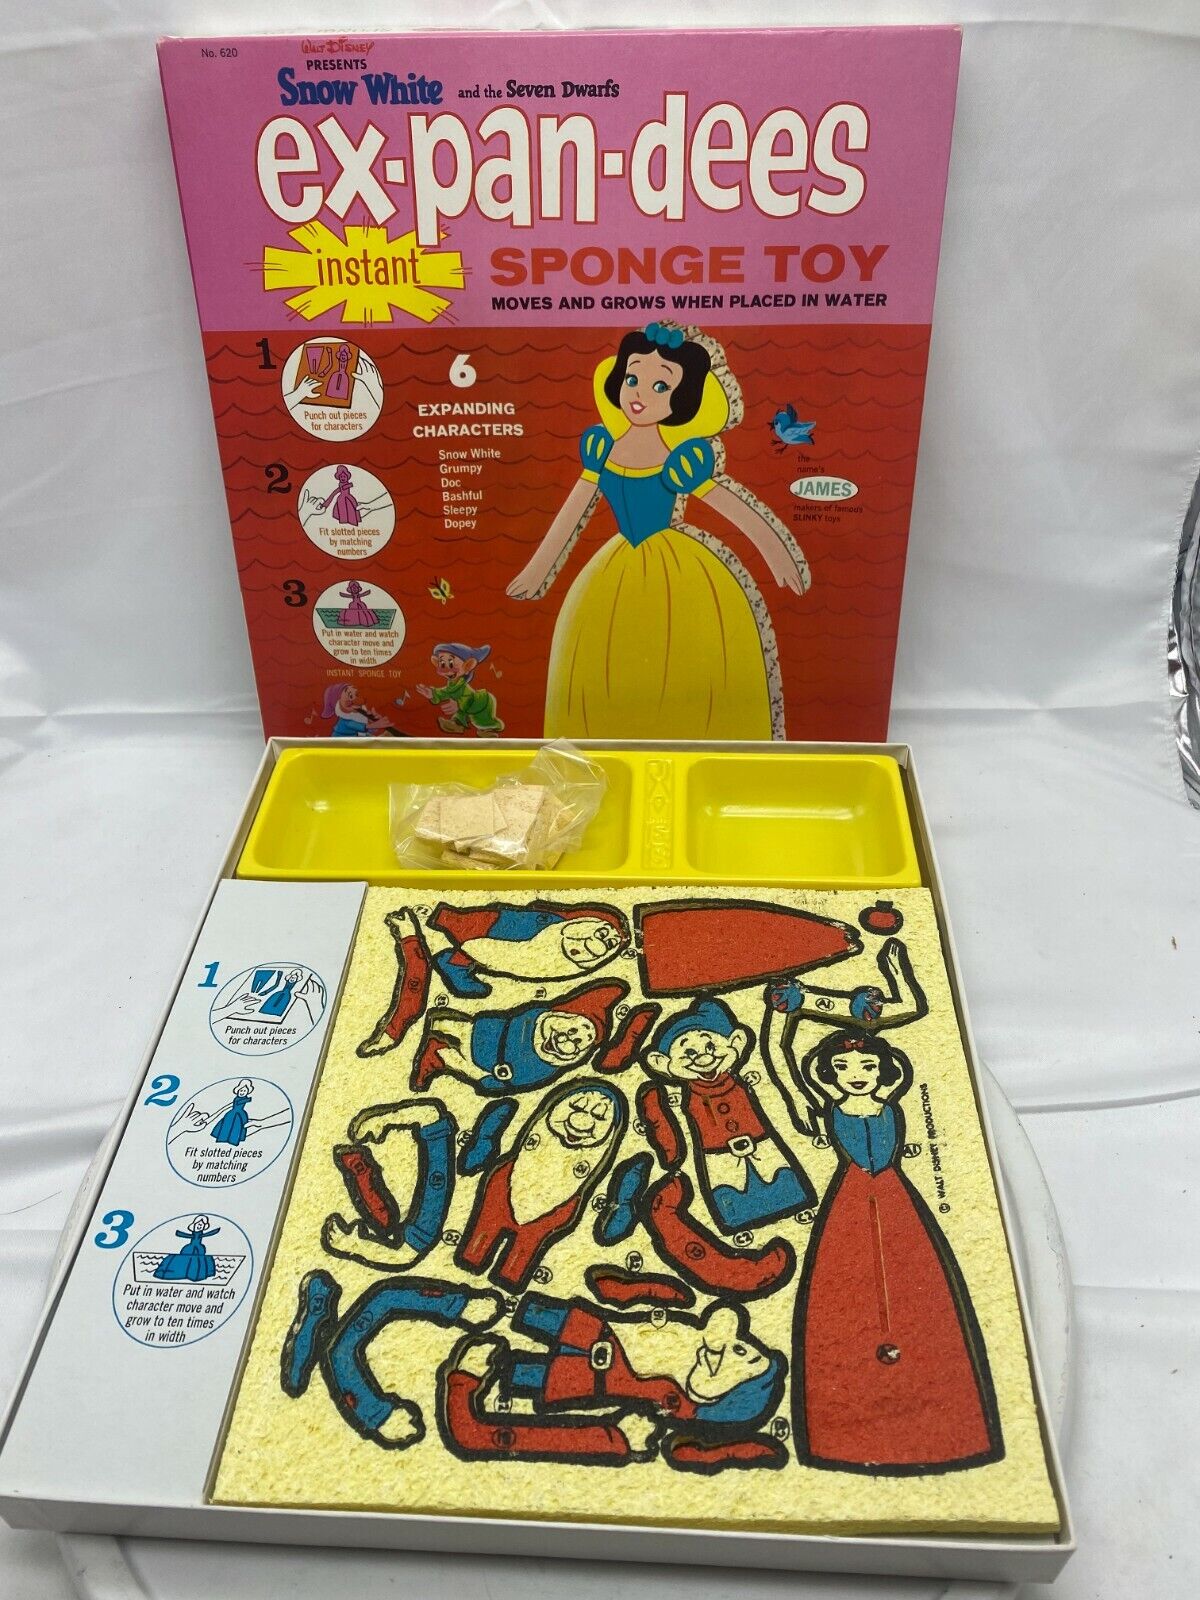 VTG Walt Disney Snow White and the seven dwarfs ex-pan-dees instant sponge toy